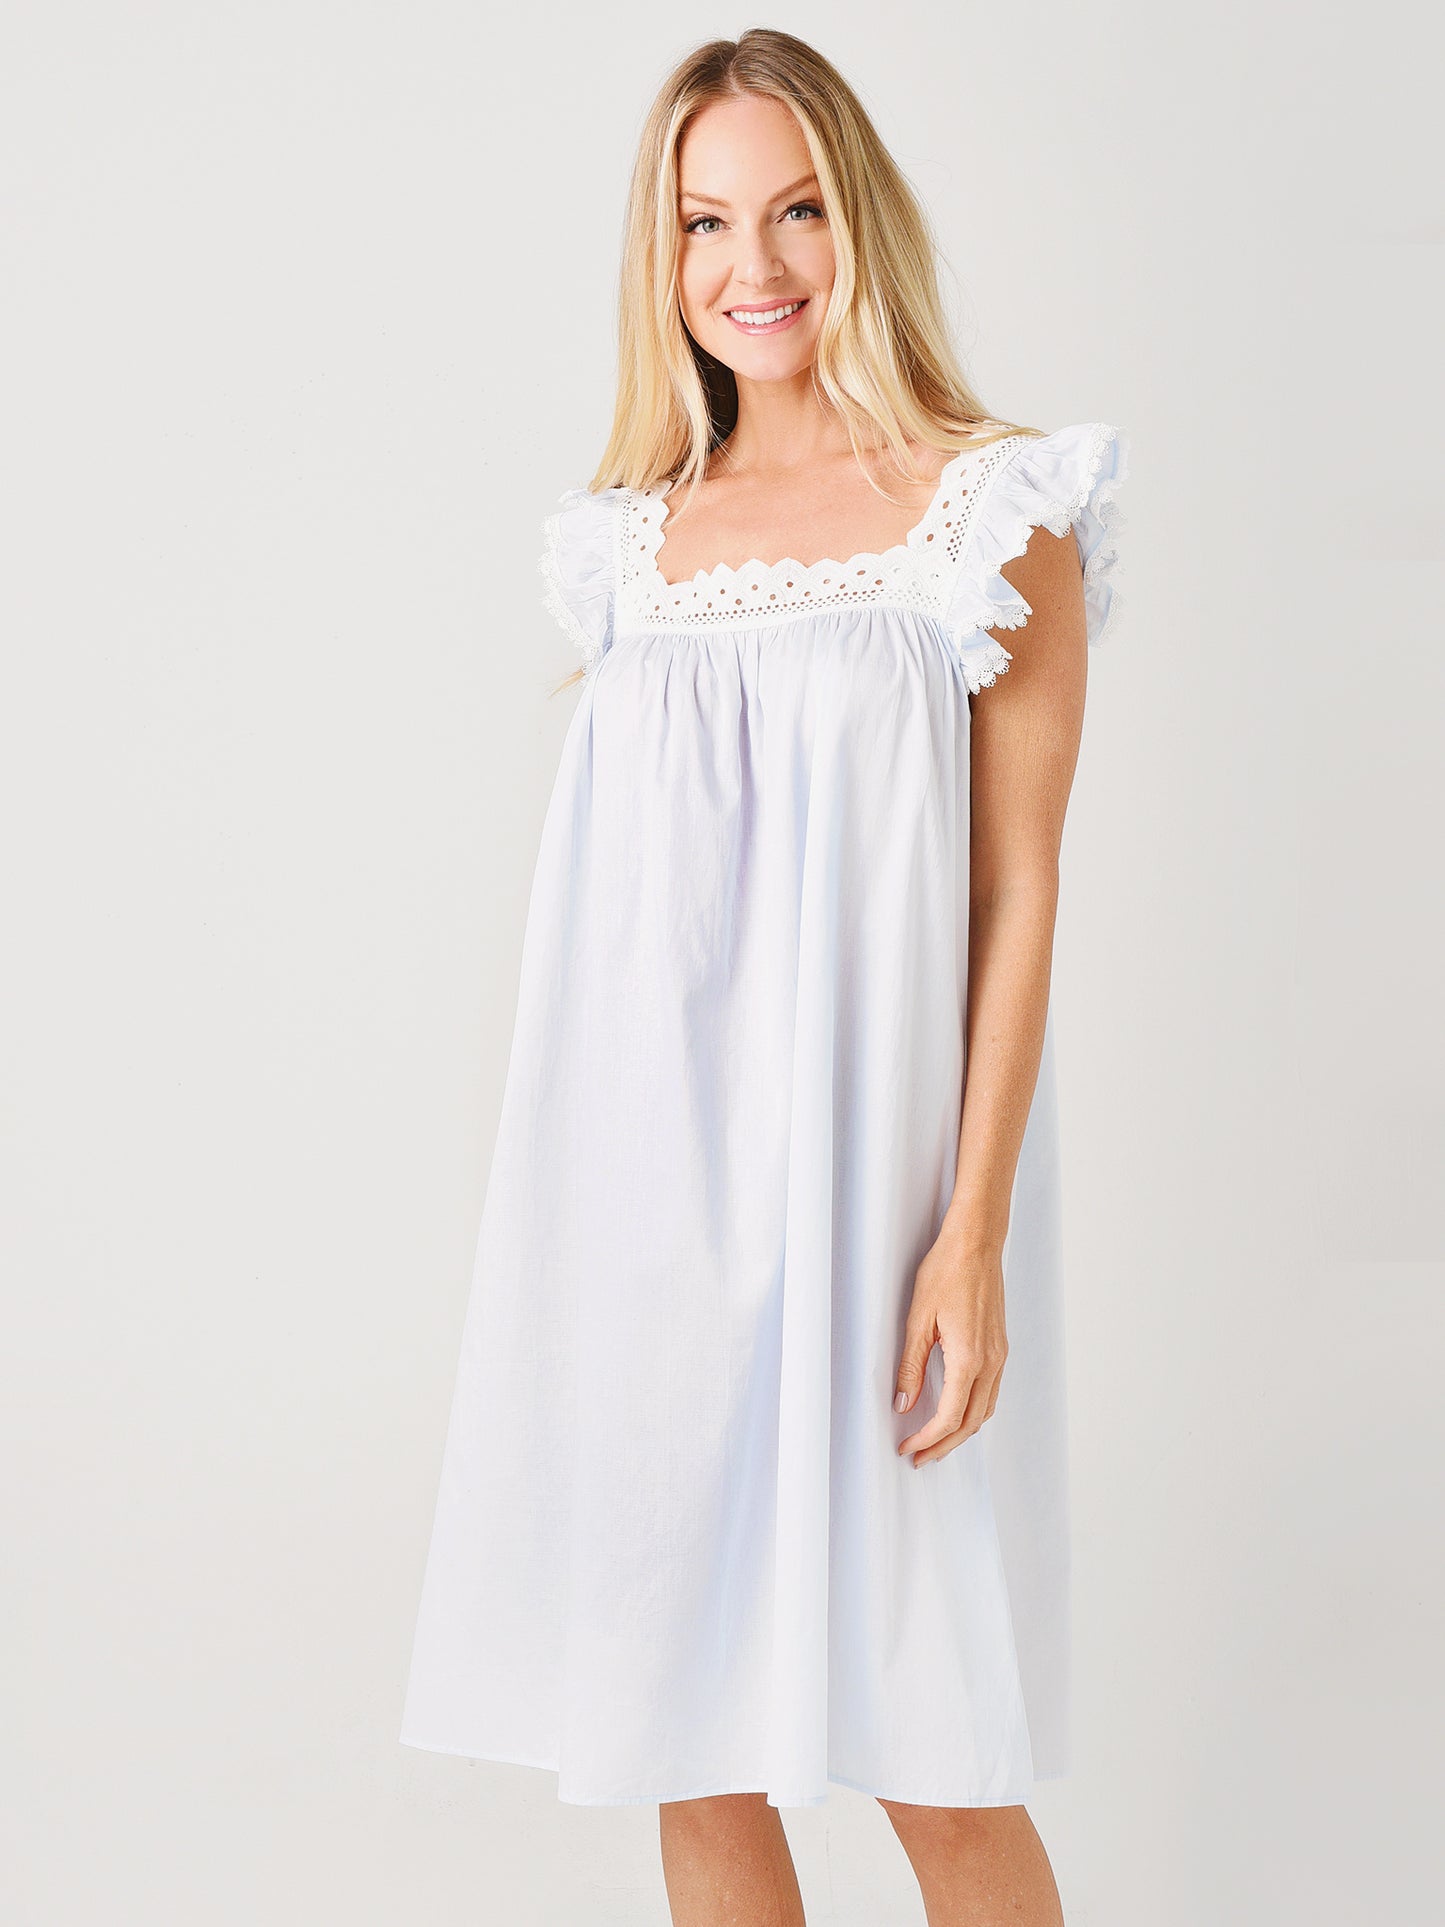 Lenora Women's Maggie Nightgown